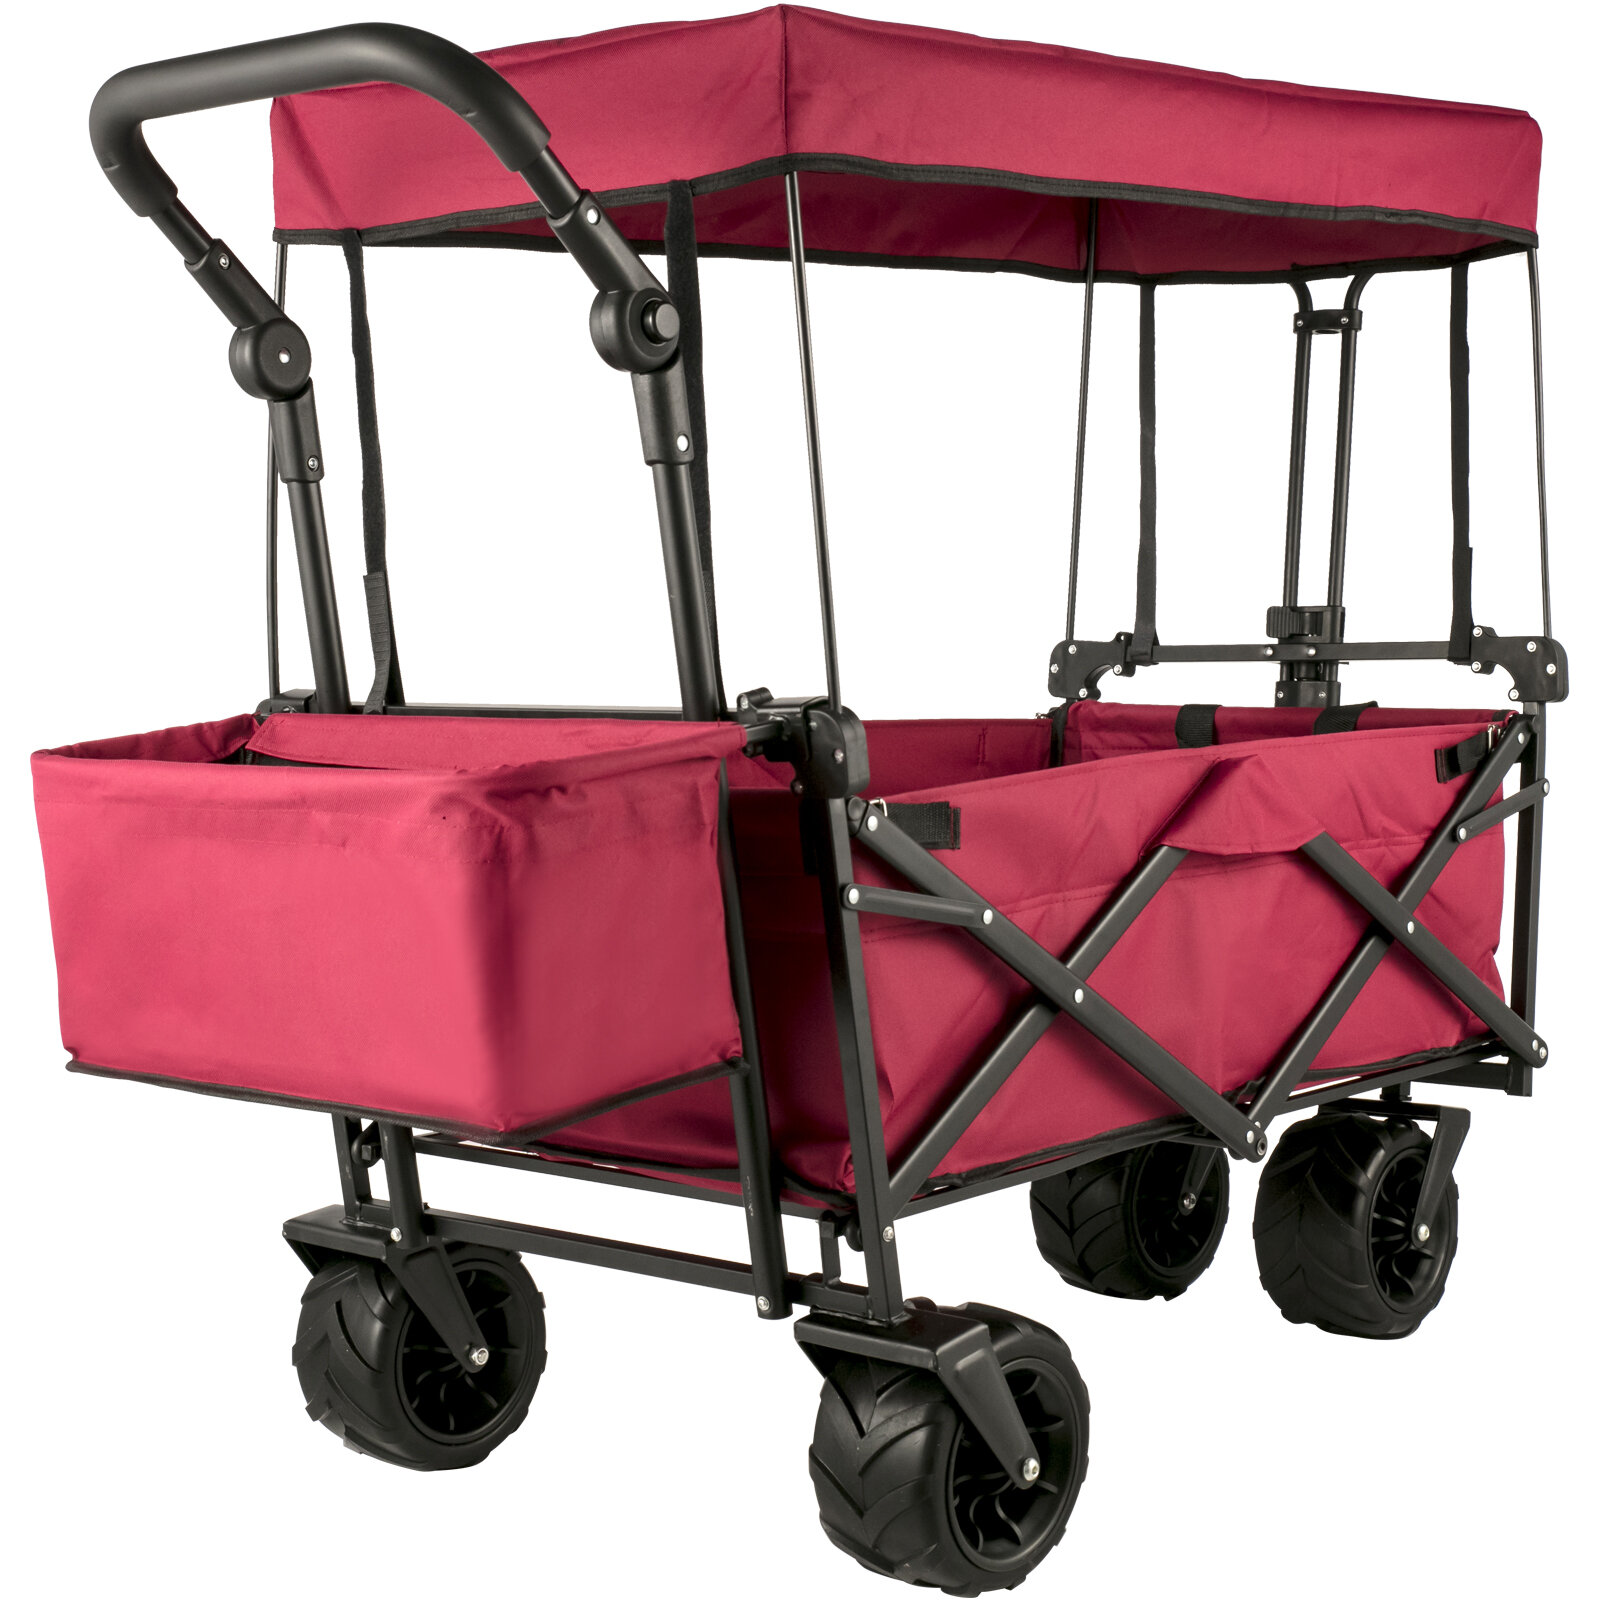 Outsunny Folding Wagon Cart, Outdoor Utility Wagon Heavy Duty